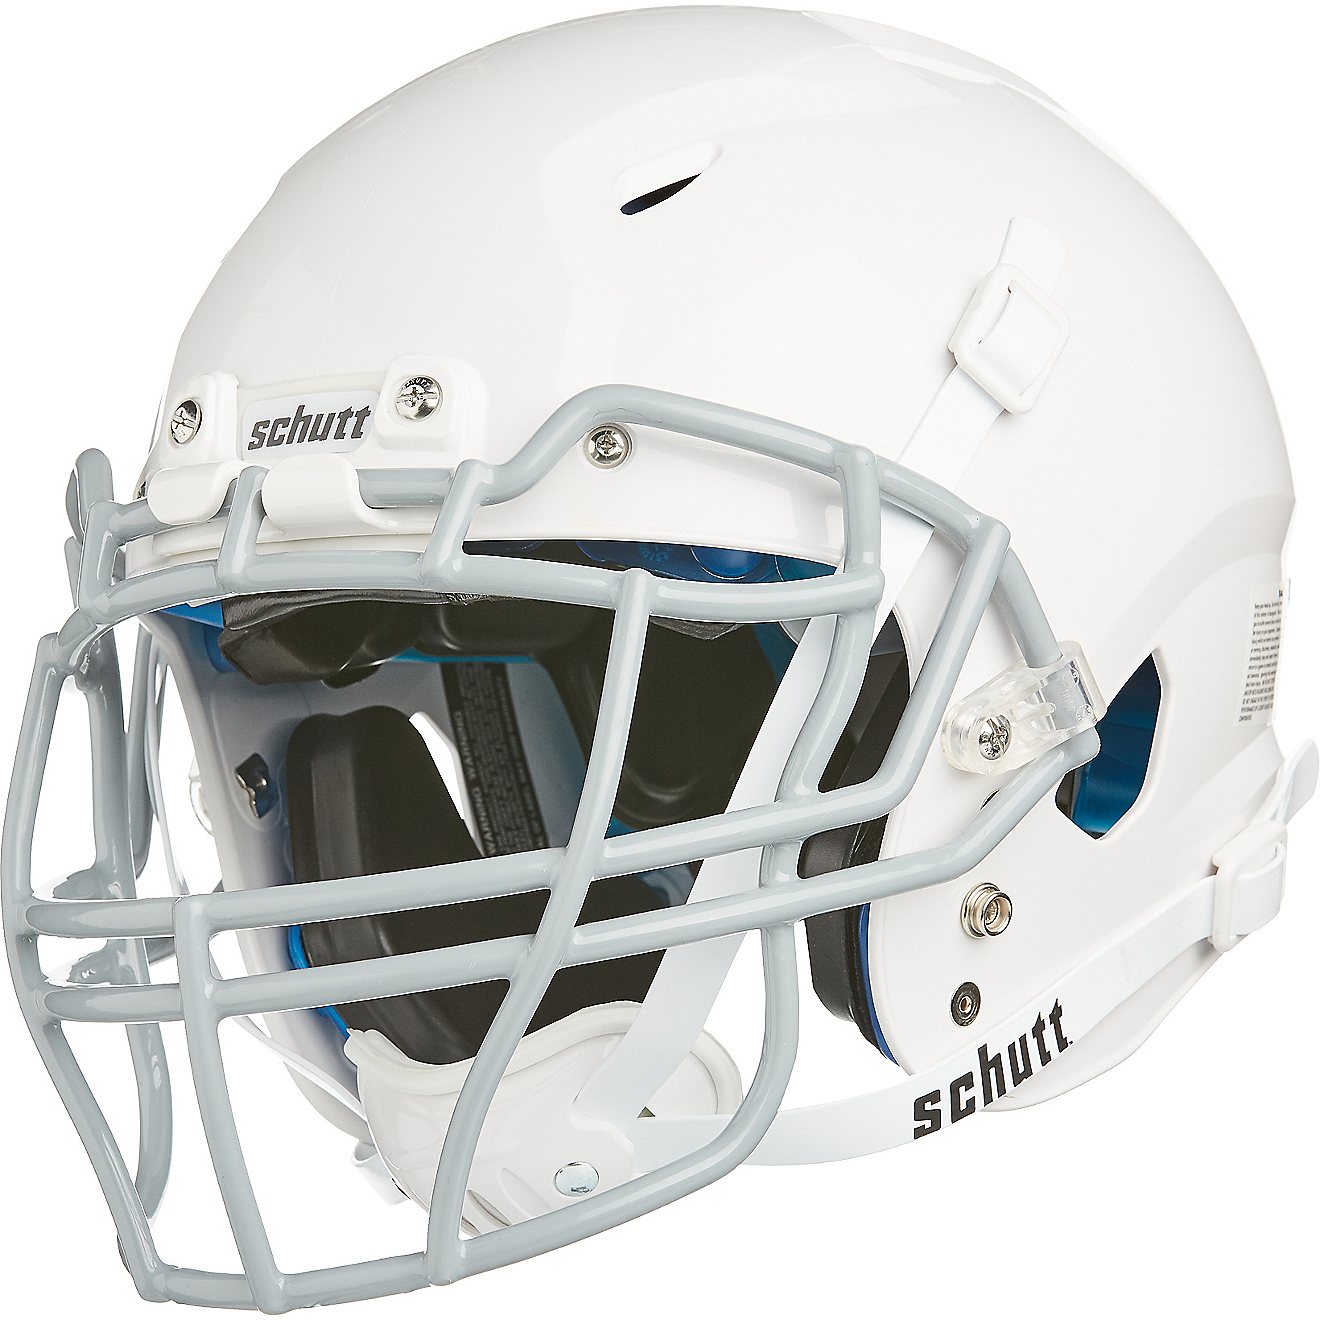 Small USED Schutt 111292860 Youth Vengeance Pro Football Helmet in White 